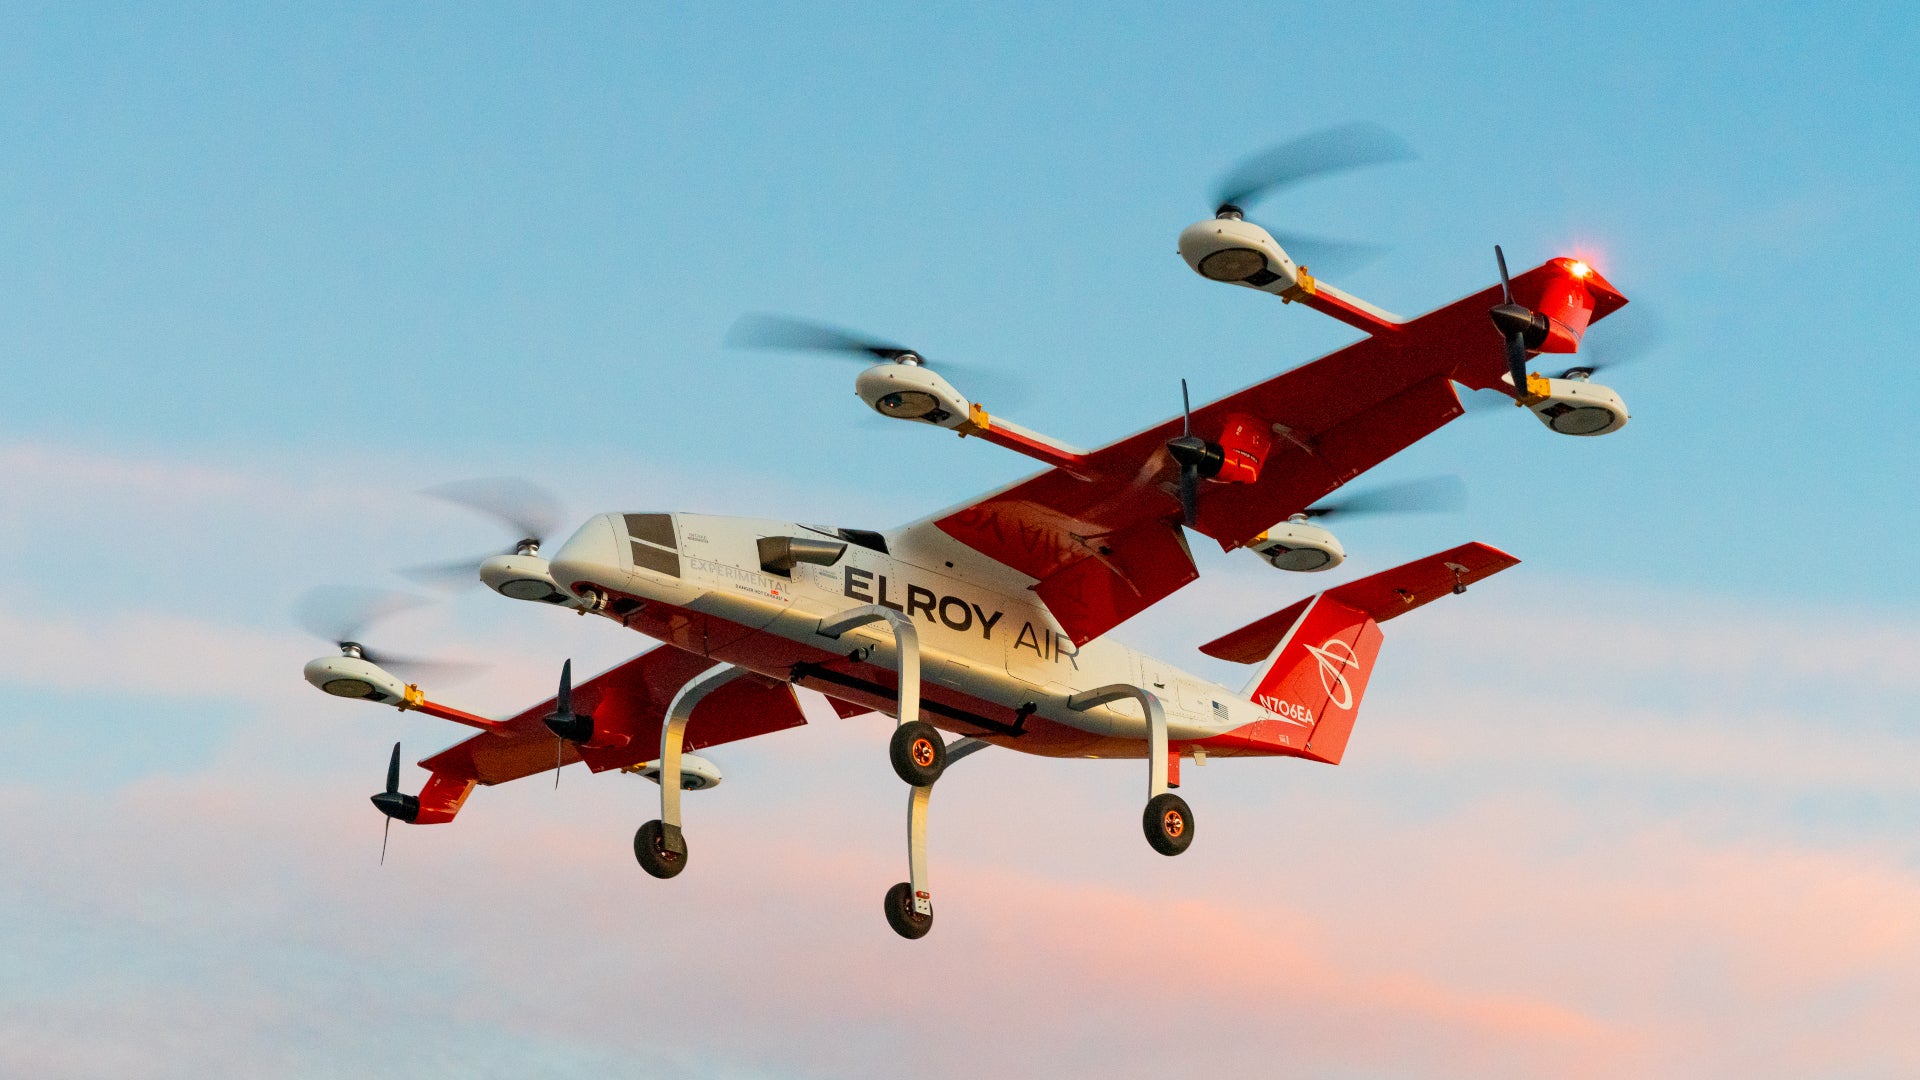 U.S. Marines to Get Autonomous Cargo Drone Demo This Summer